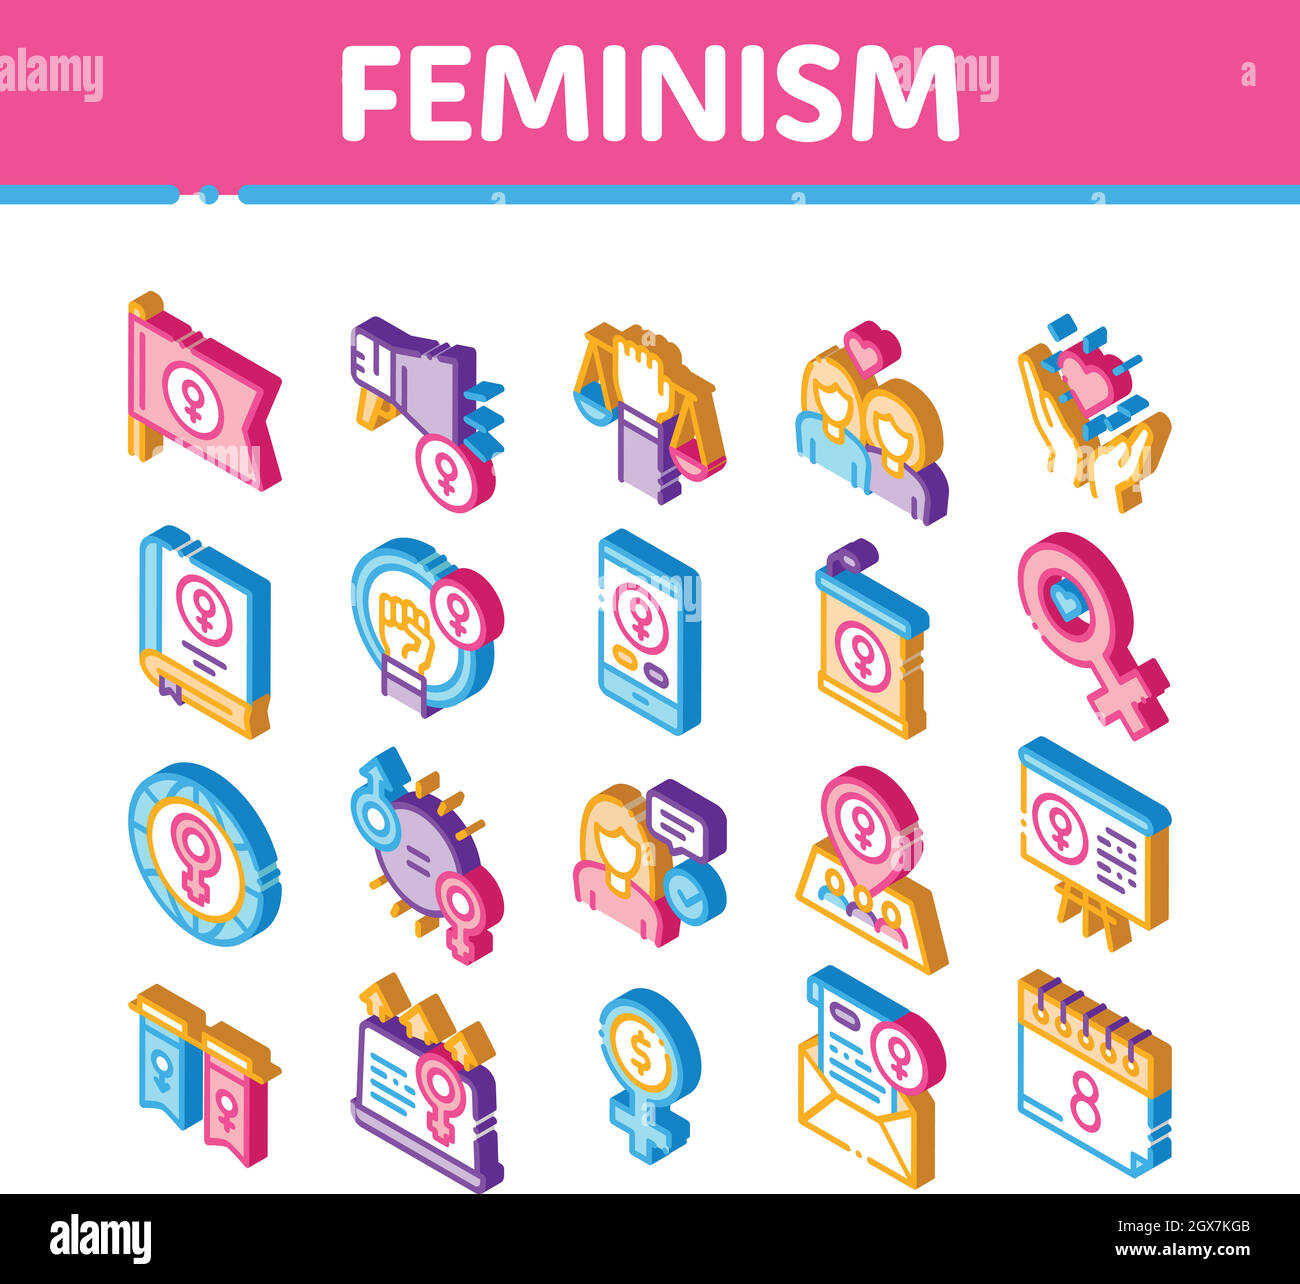 Feminism Woman Power Isometric Icons Set Vector Stock Vector